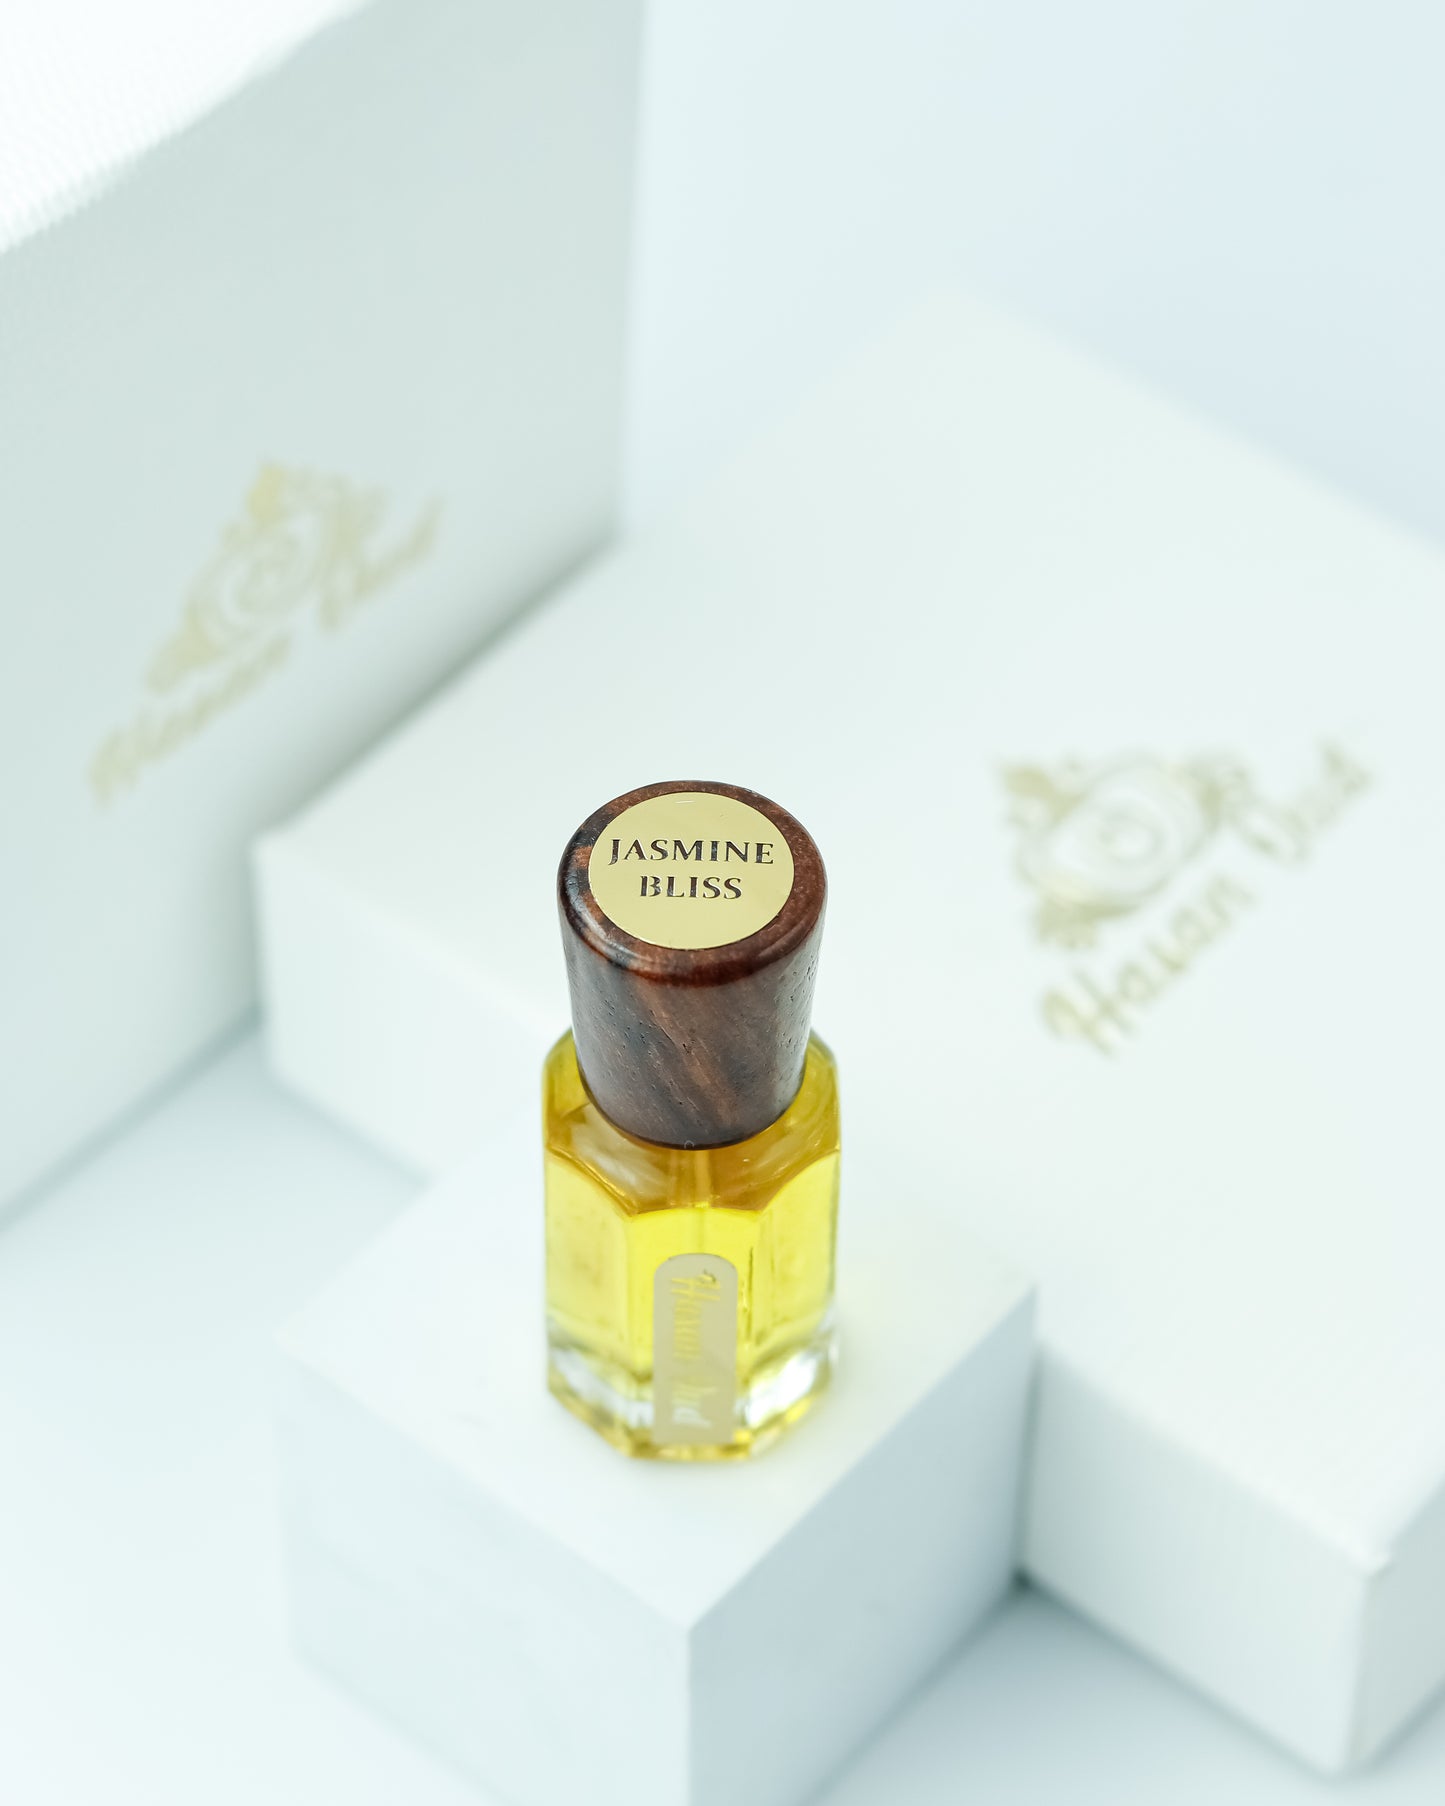 Jasmine bliss Premium Fragrances Alcohol Free By Hasan Oud